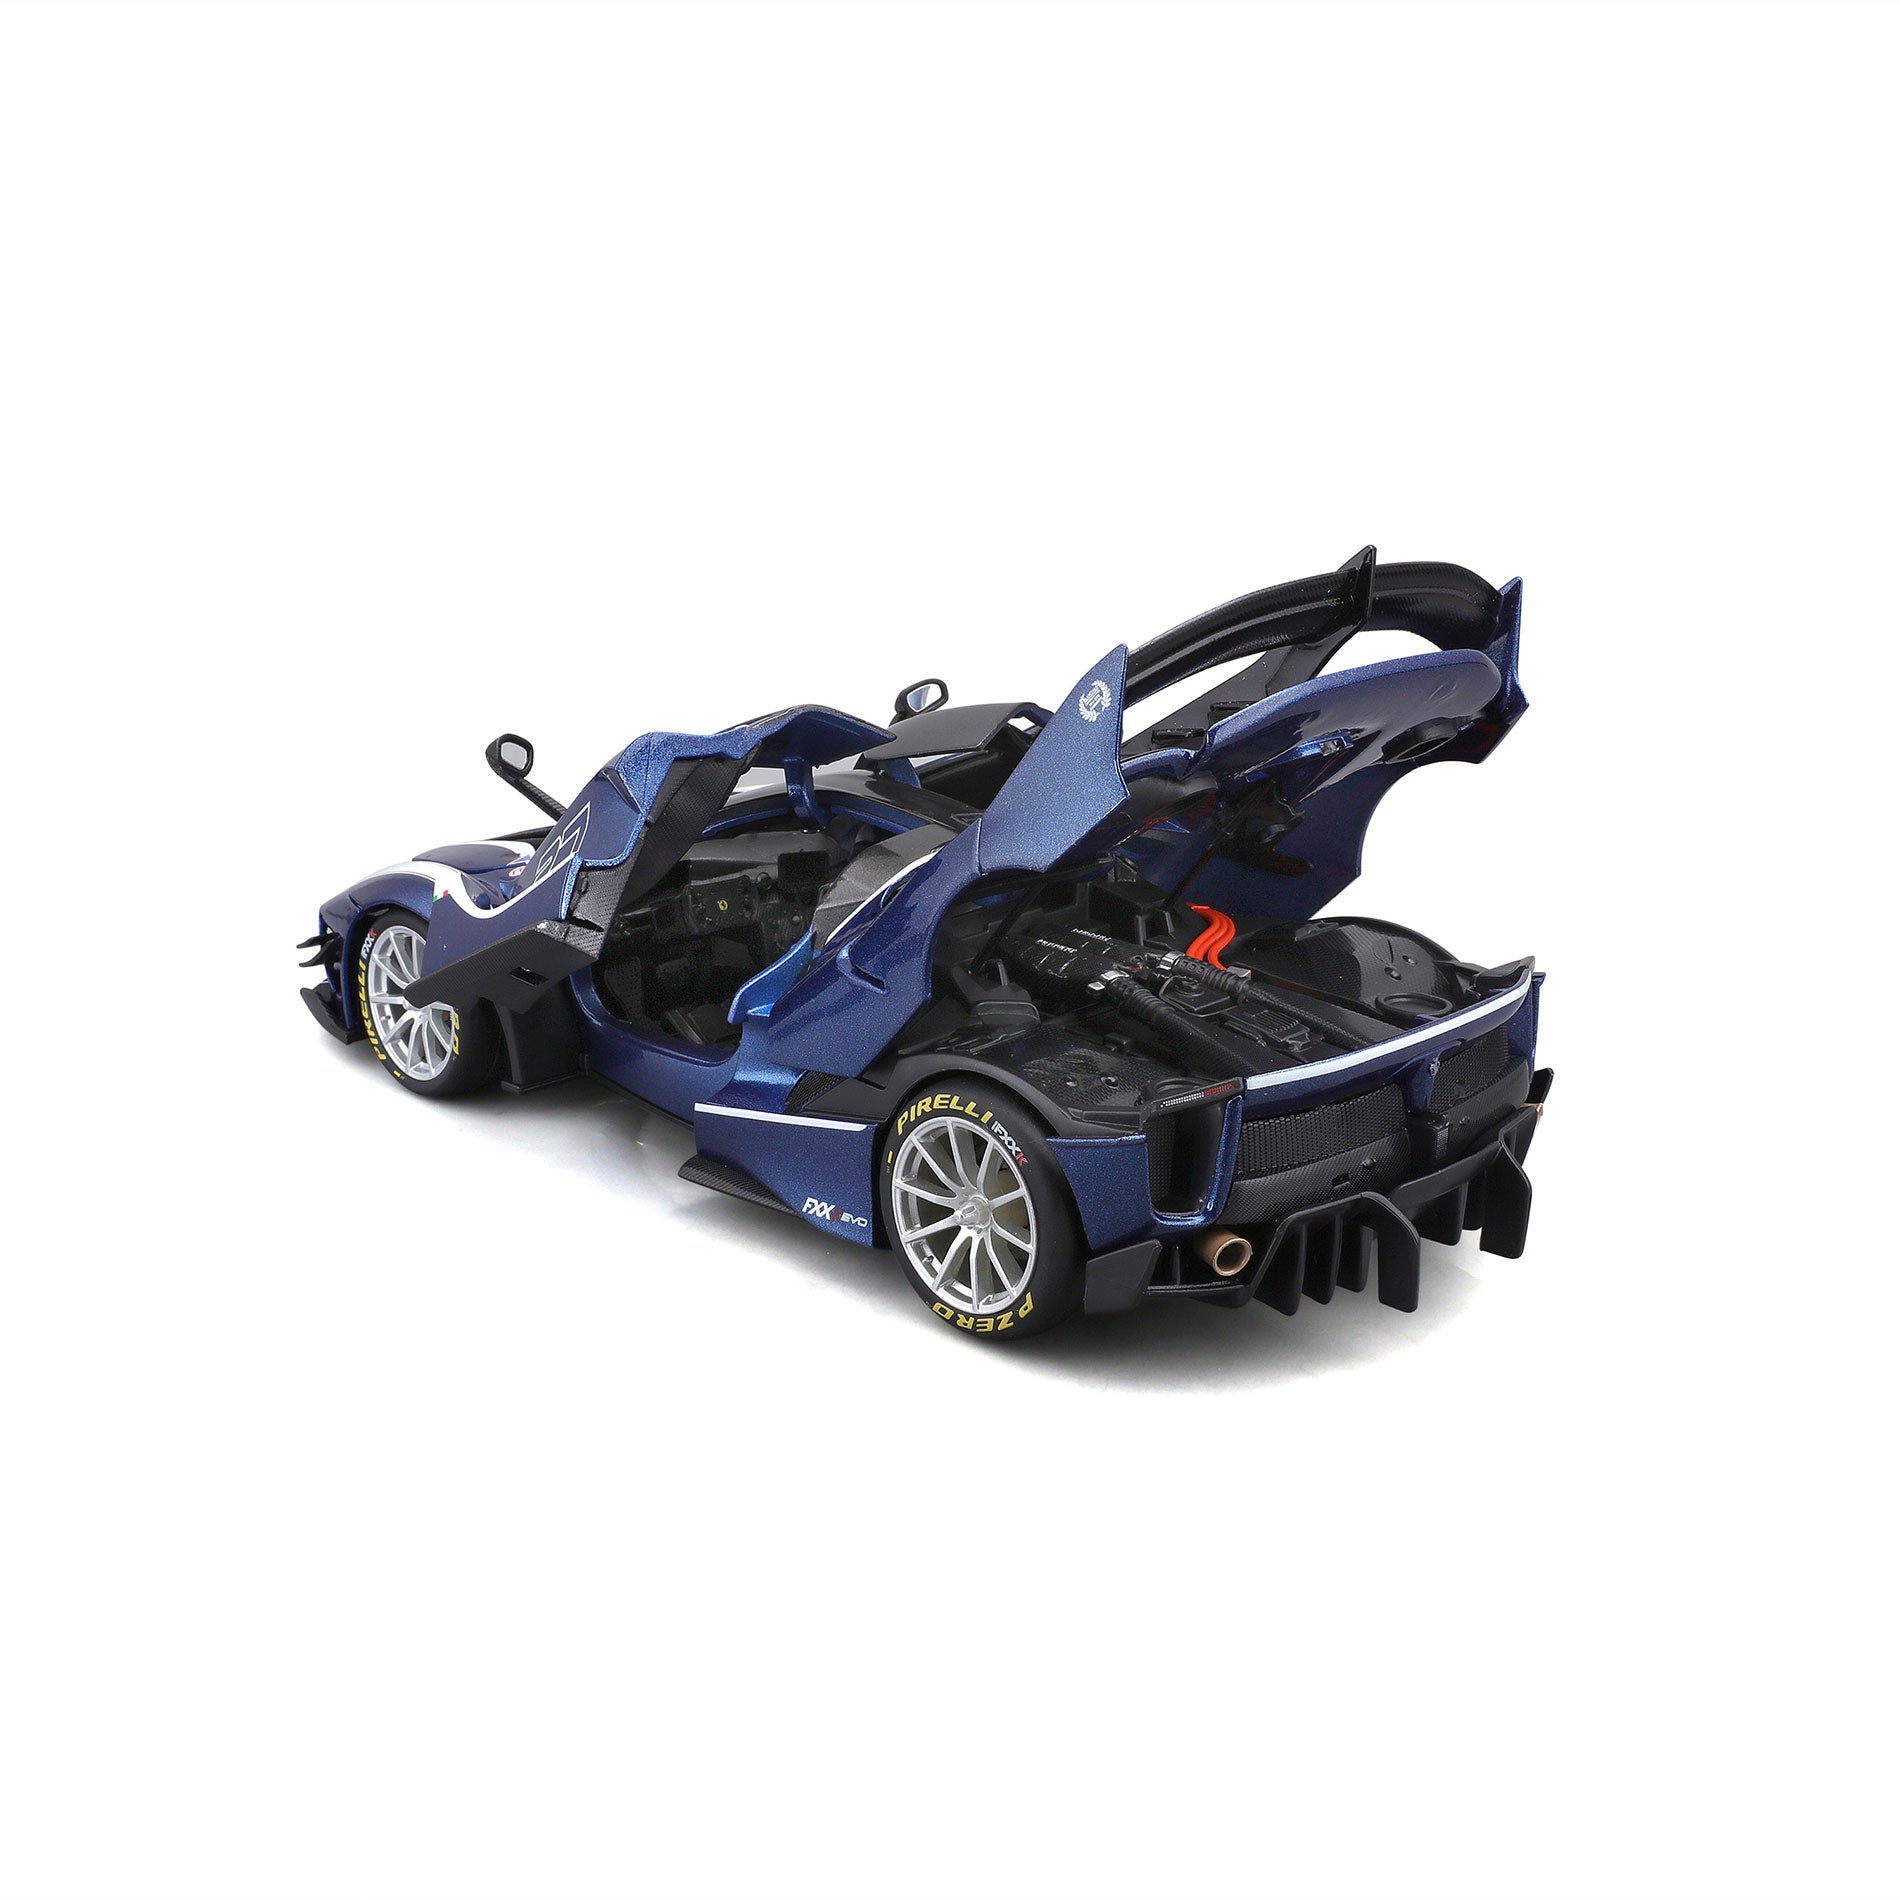 18-16012 - 1:18 - Bburago Ferrari R&P FXX K EVO - #27 Blue